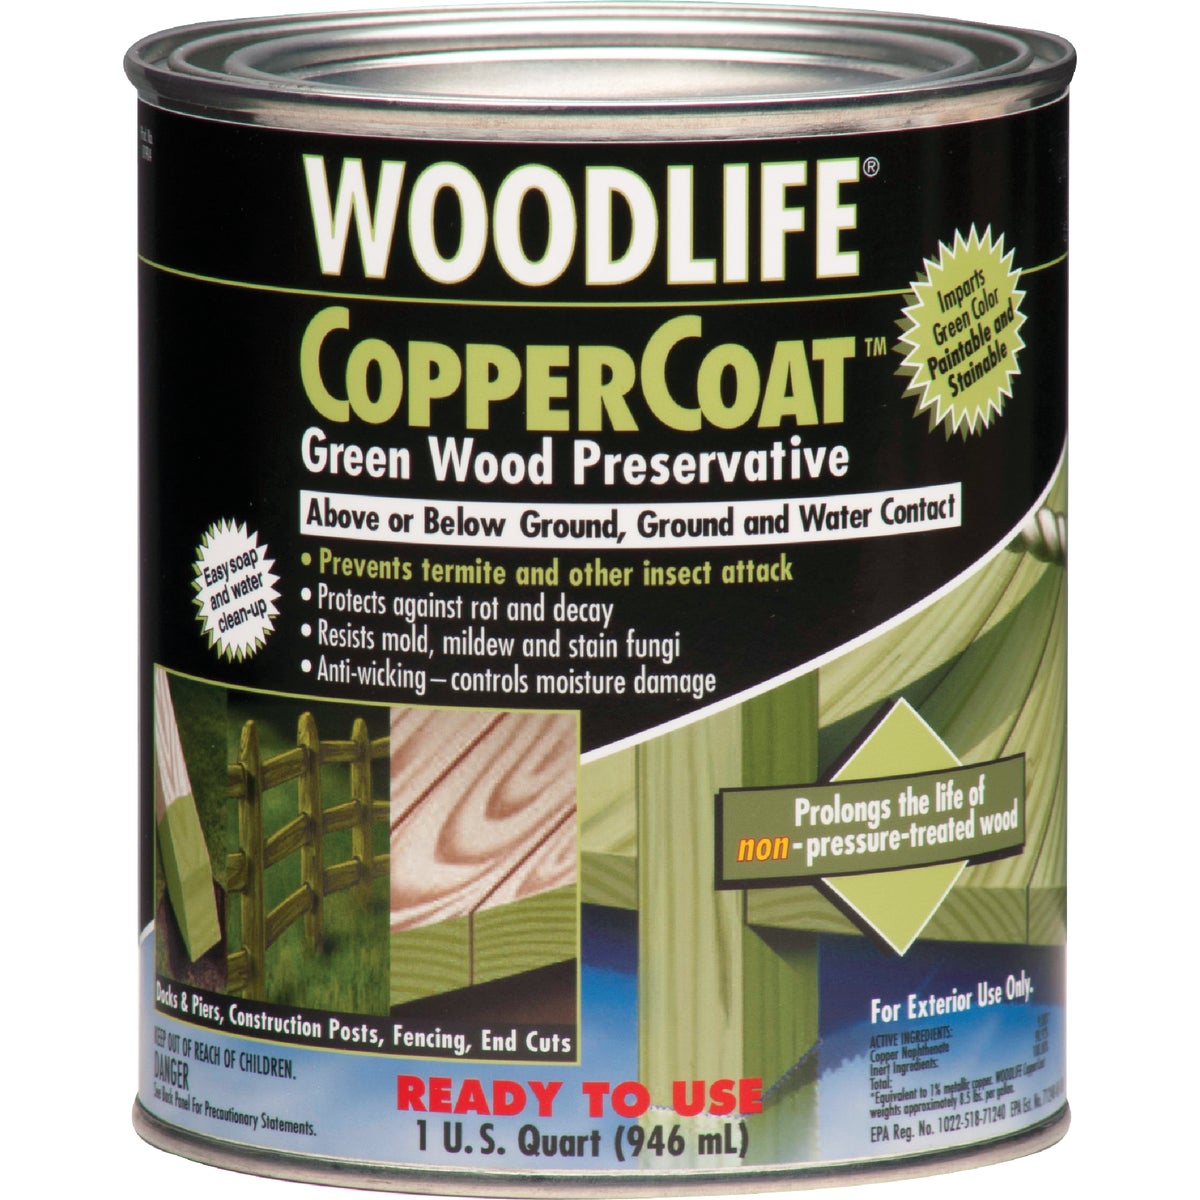 Rust-Oleum Woodlife Water-Based Coppercoat Green Wood Preservative, 1 Qt.